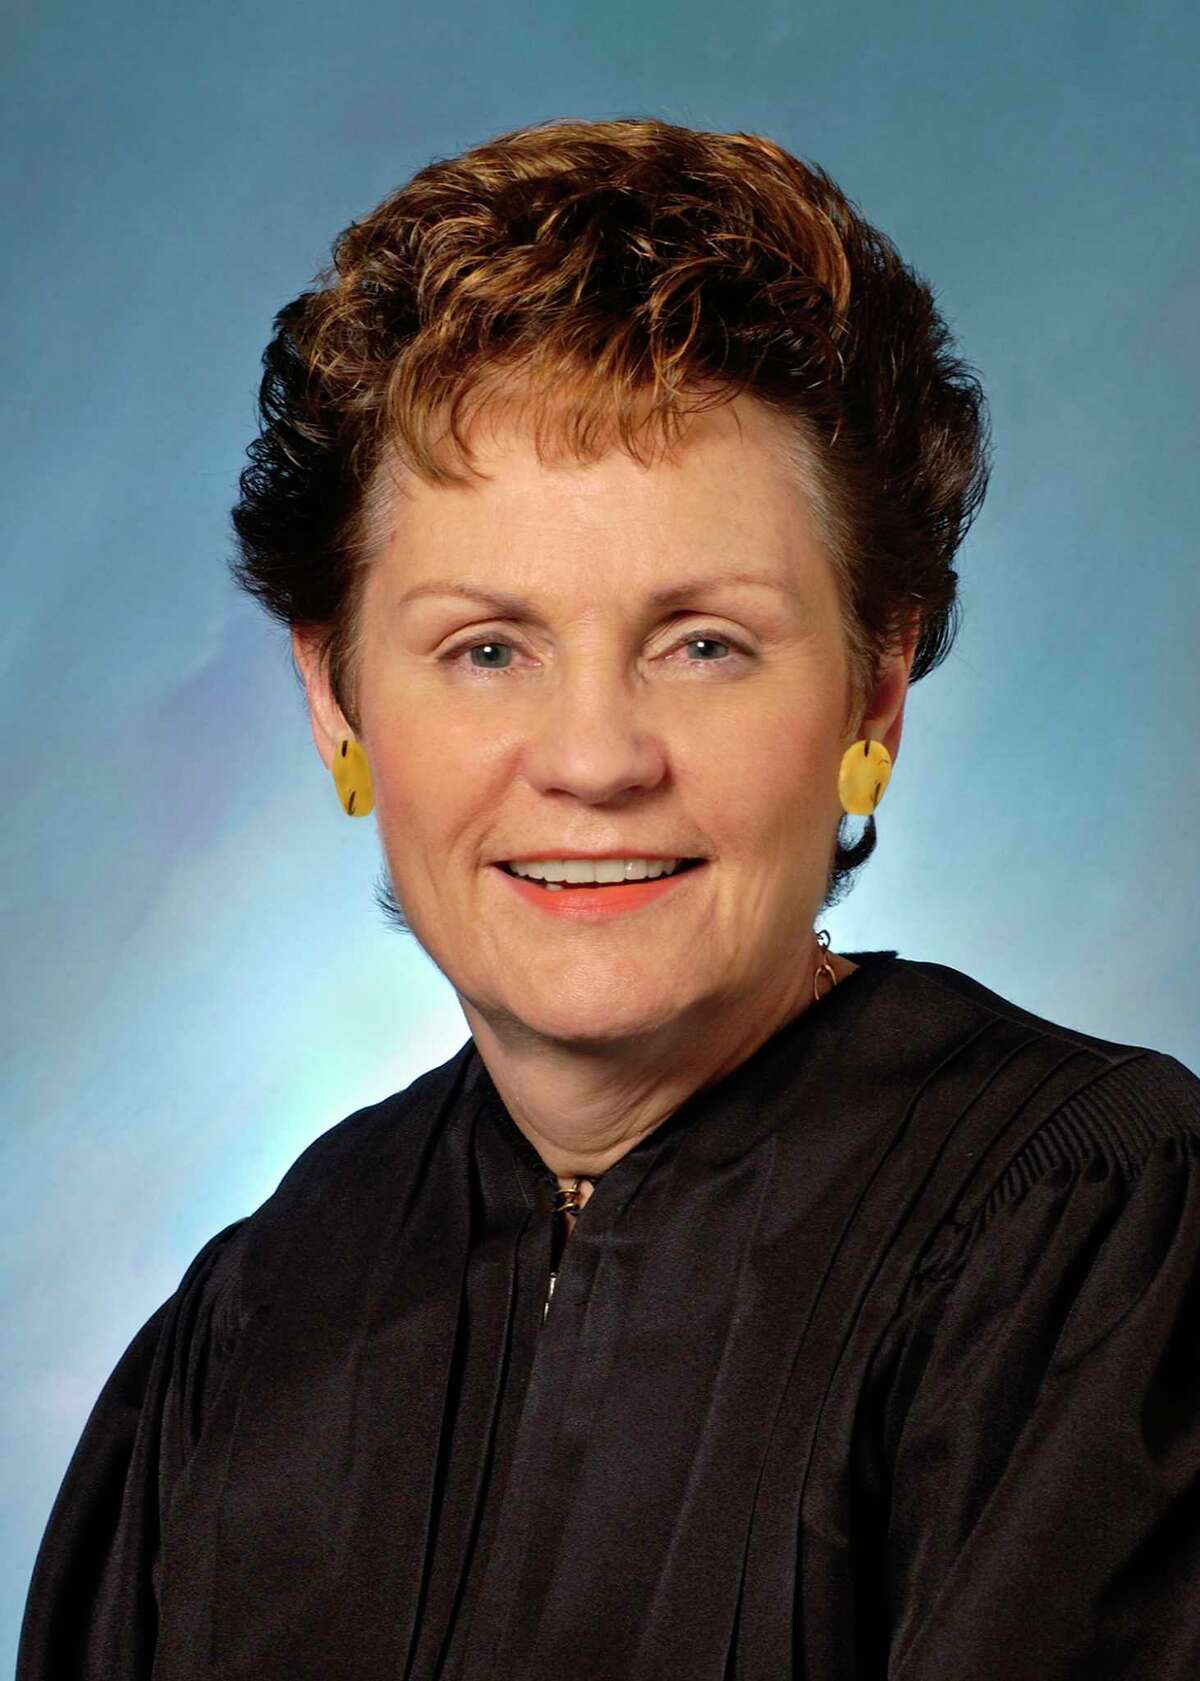 Justice Rita Garman